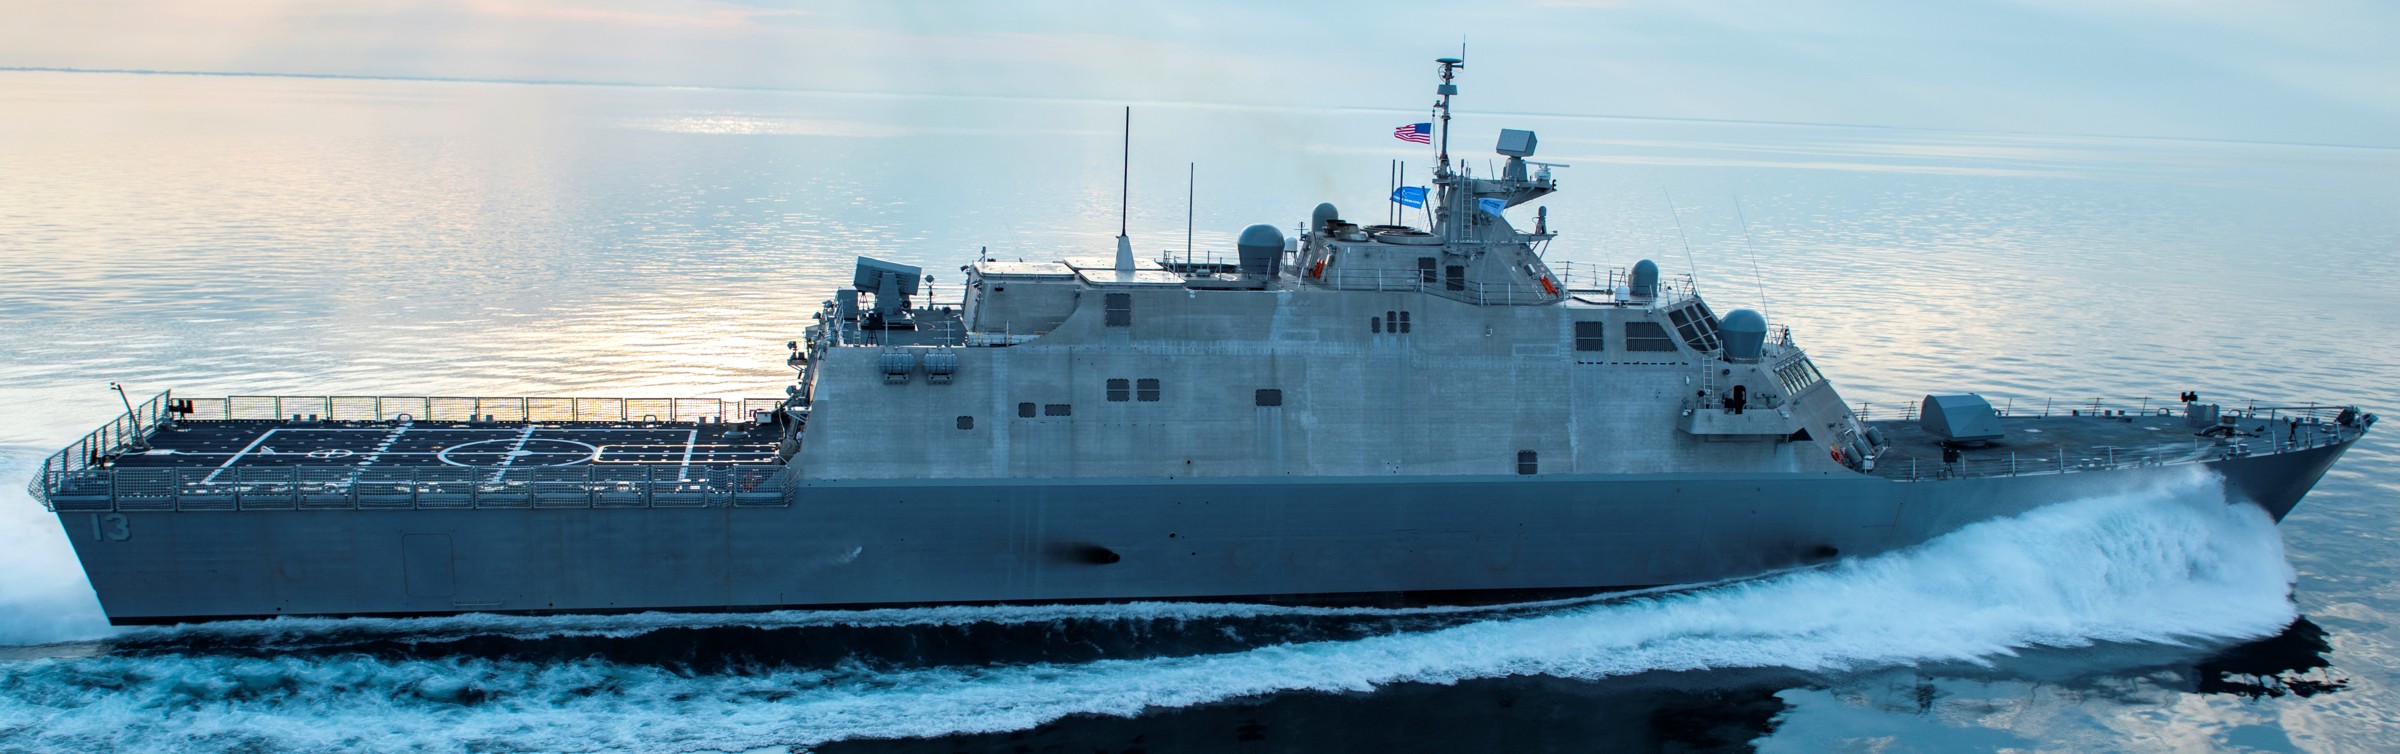 lcs-13 uss wichita freedom class littoral combat ship navy 09